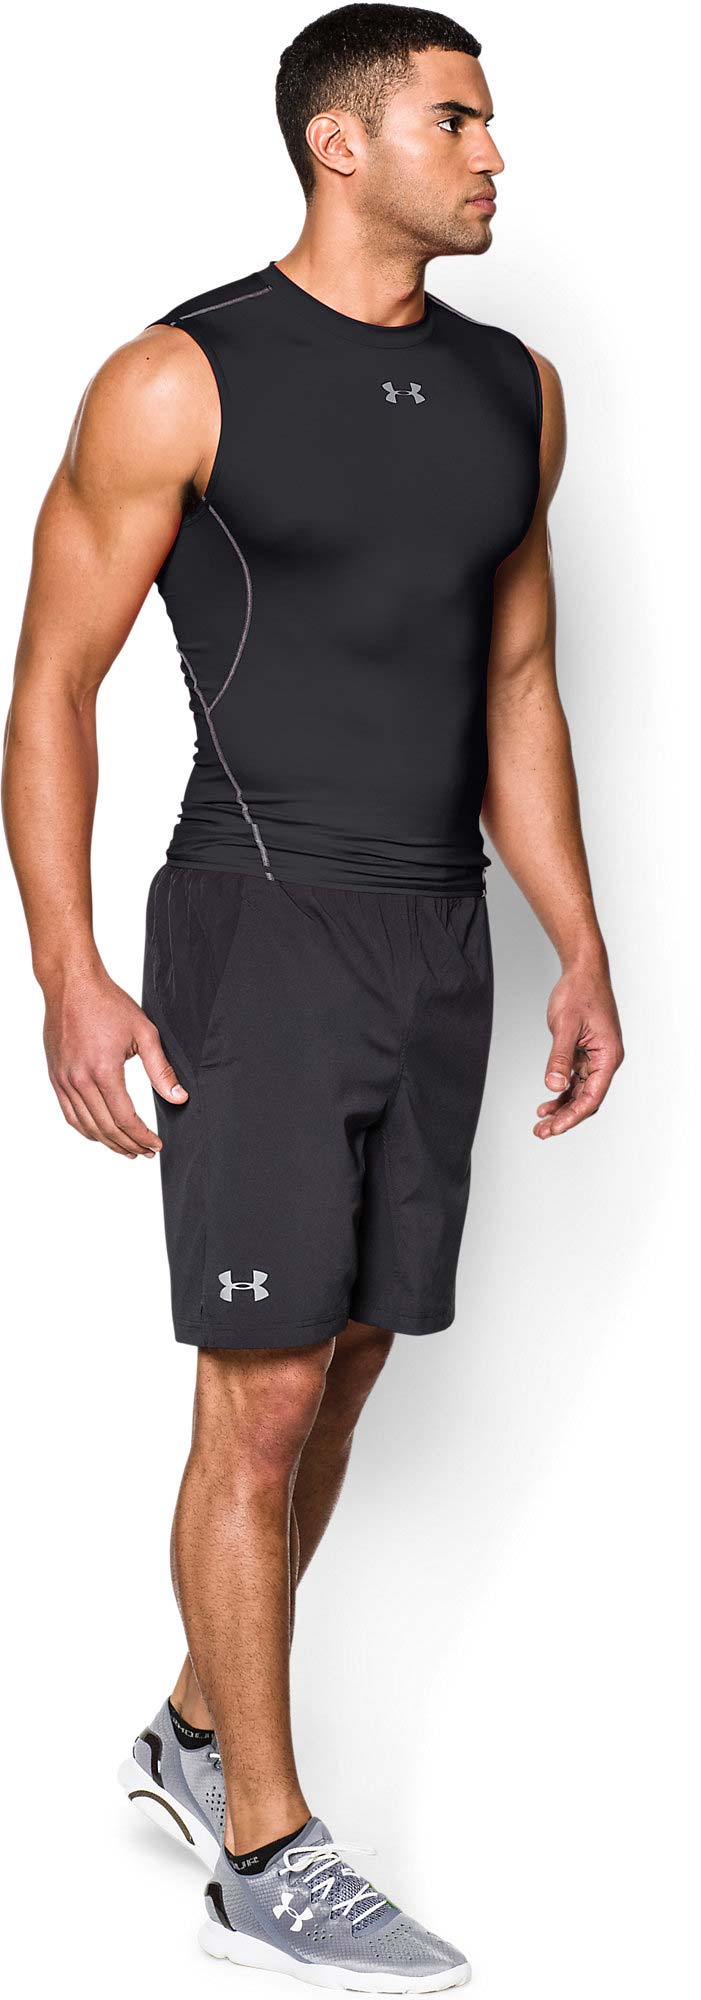 Men’s compression sleeveless top